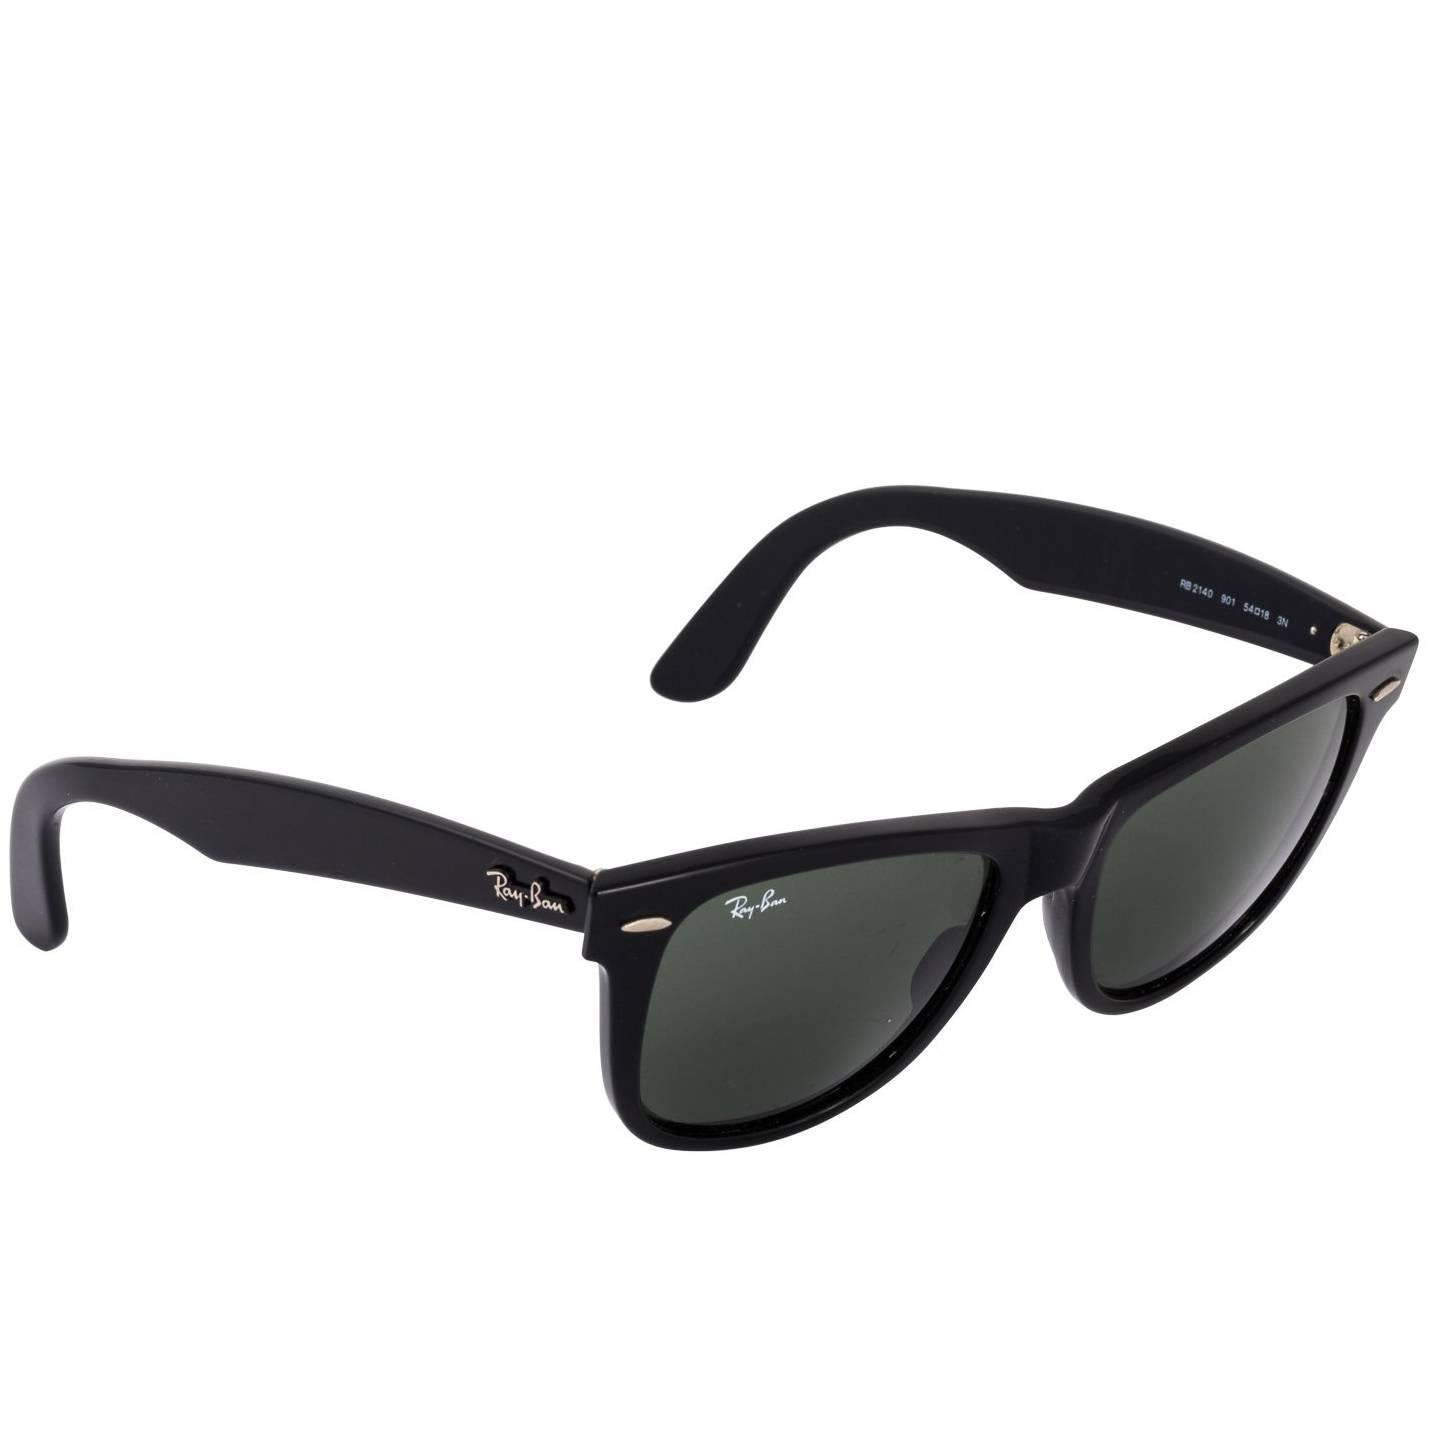  Black Ray-Ban sunglasses